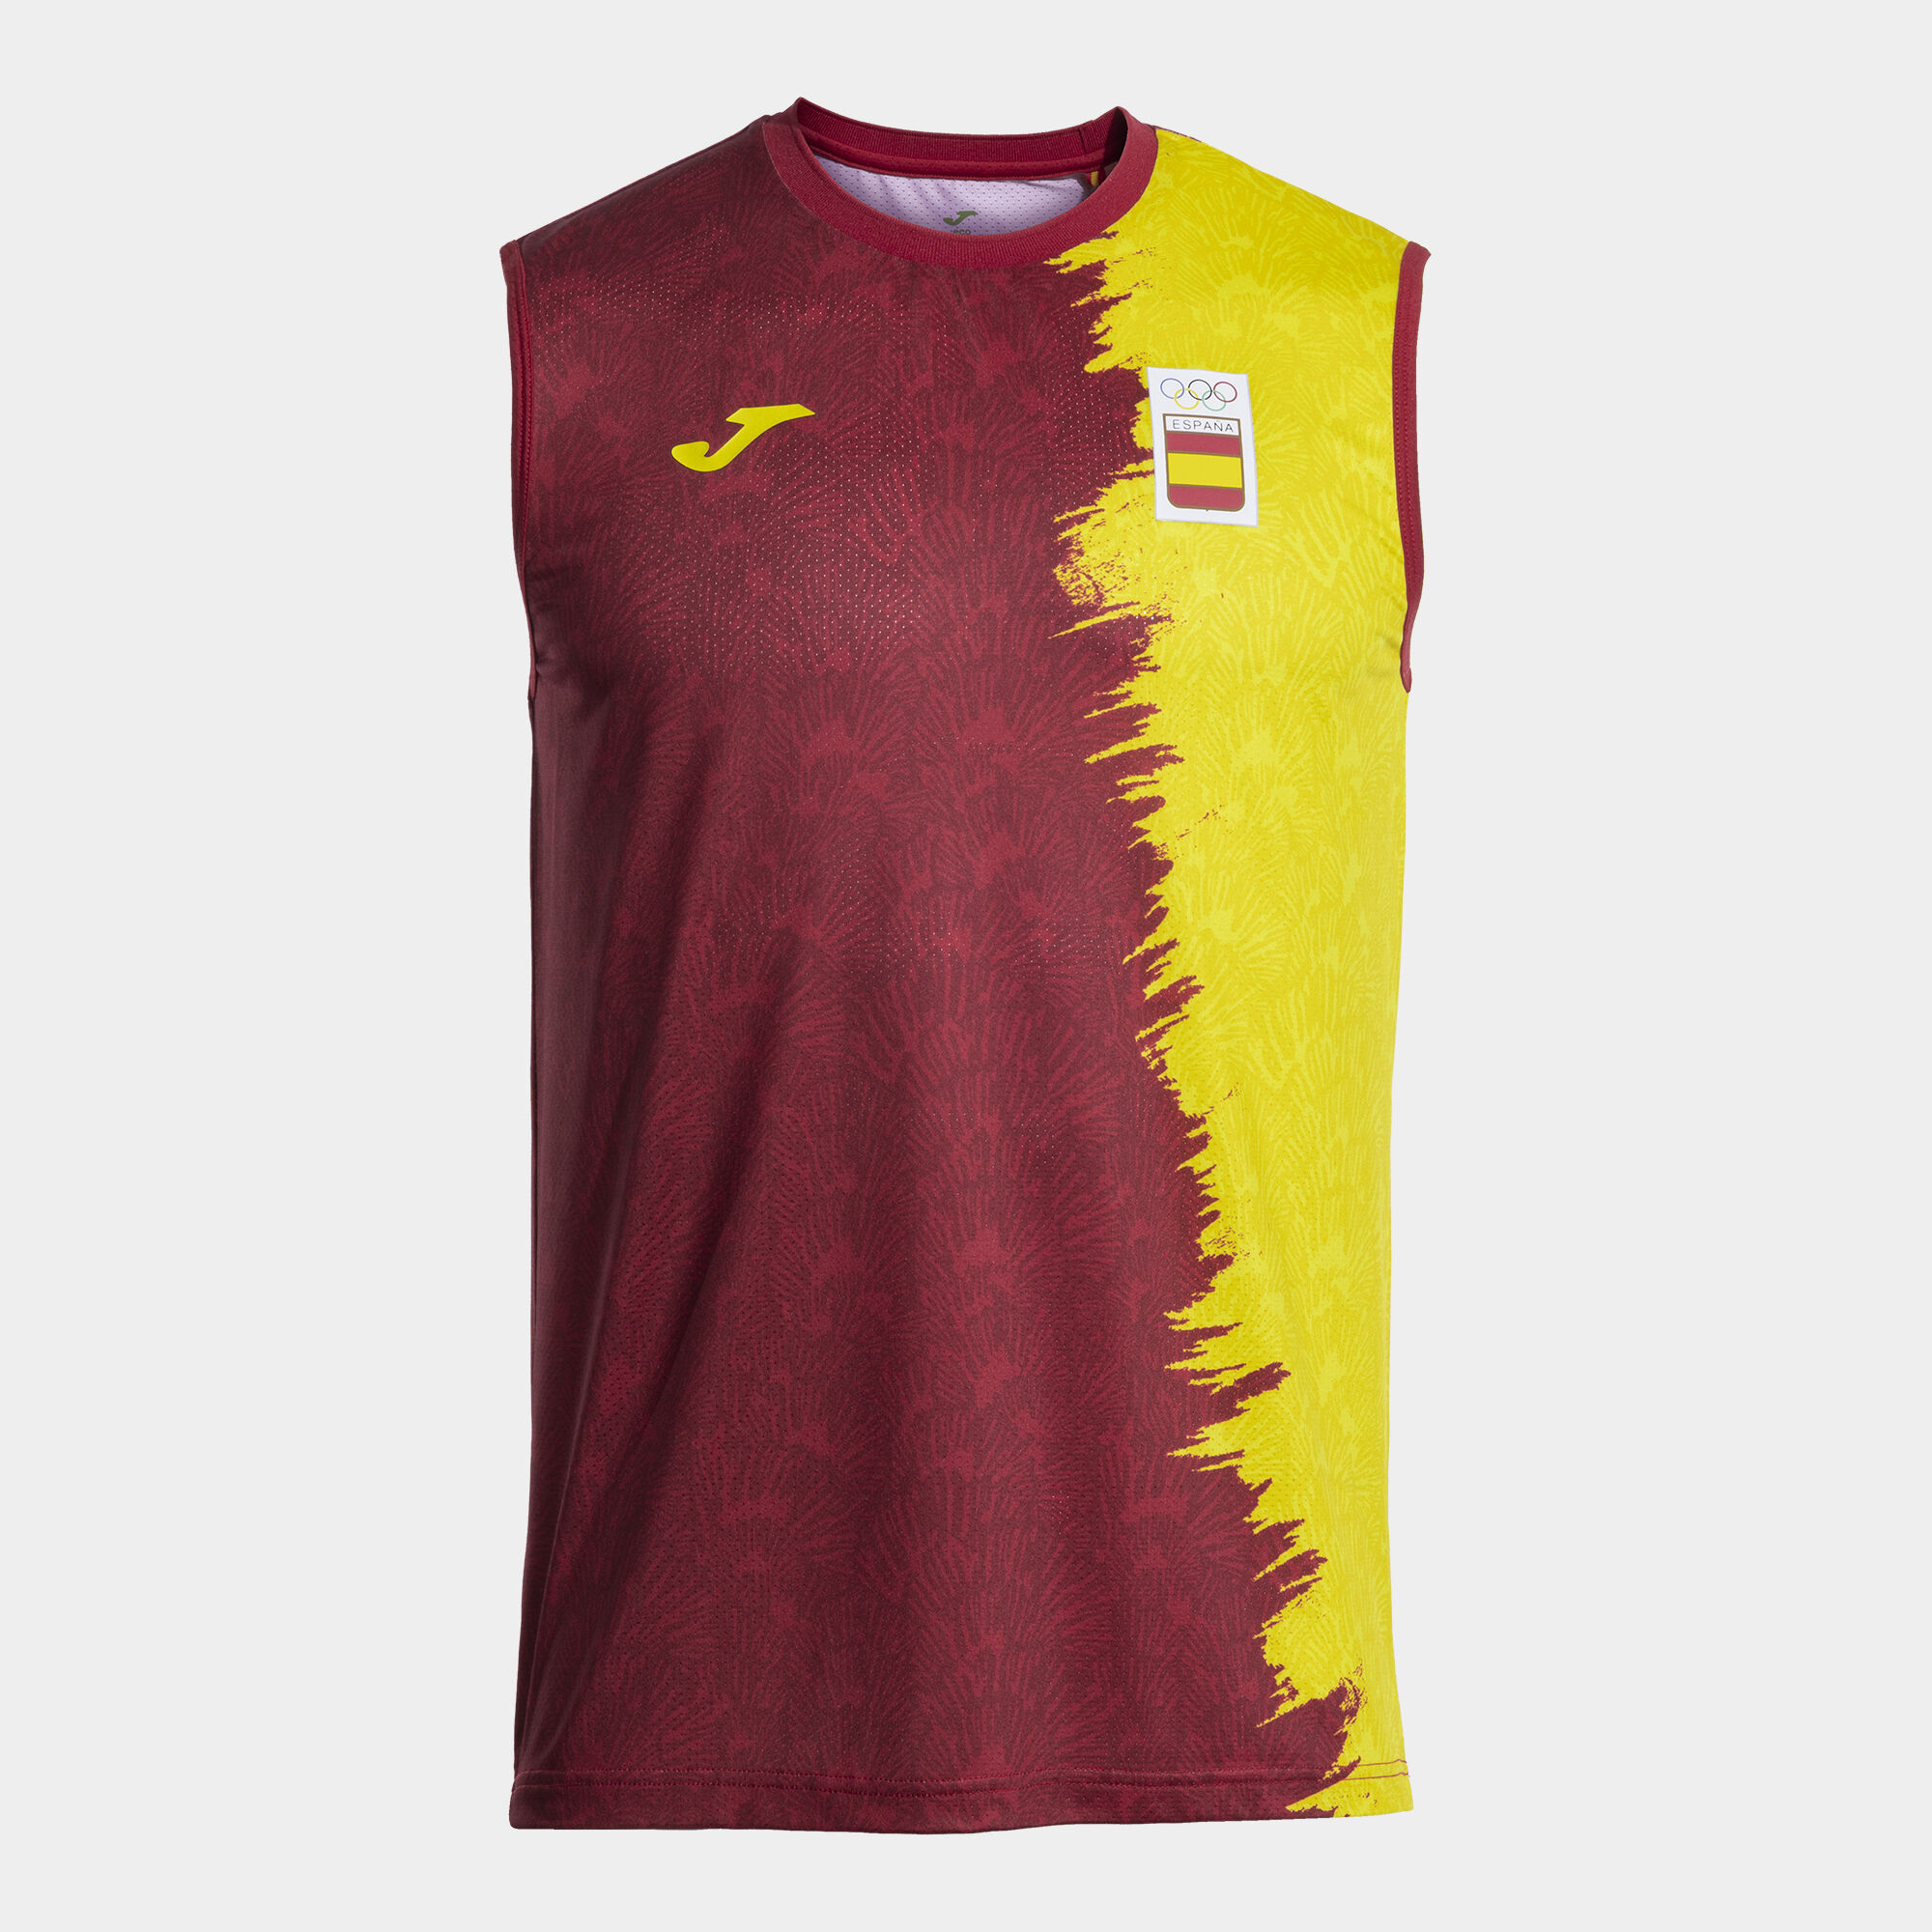 Camiseta sin mangas paseo Comité Olímpico Español